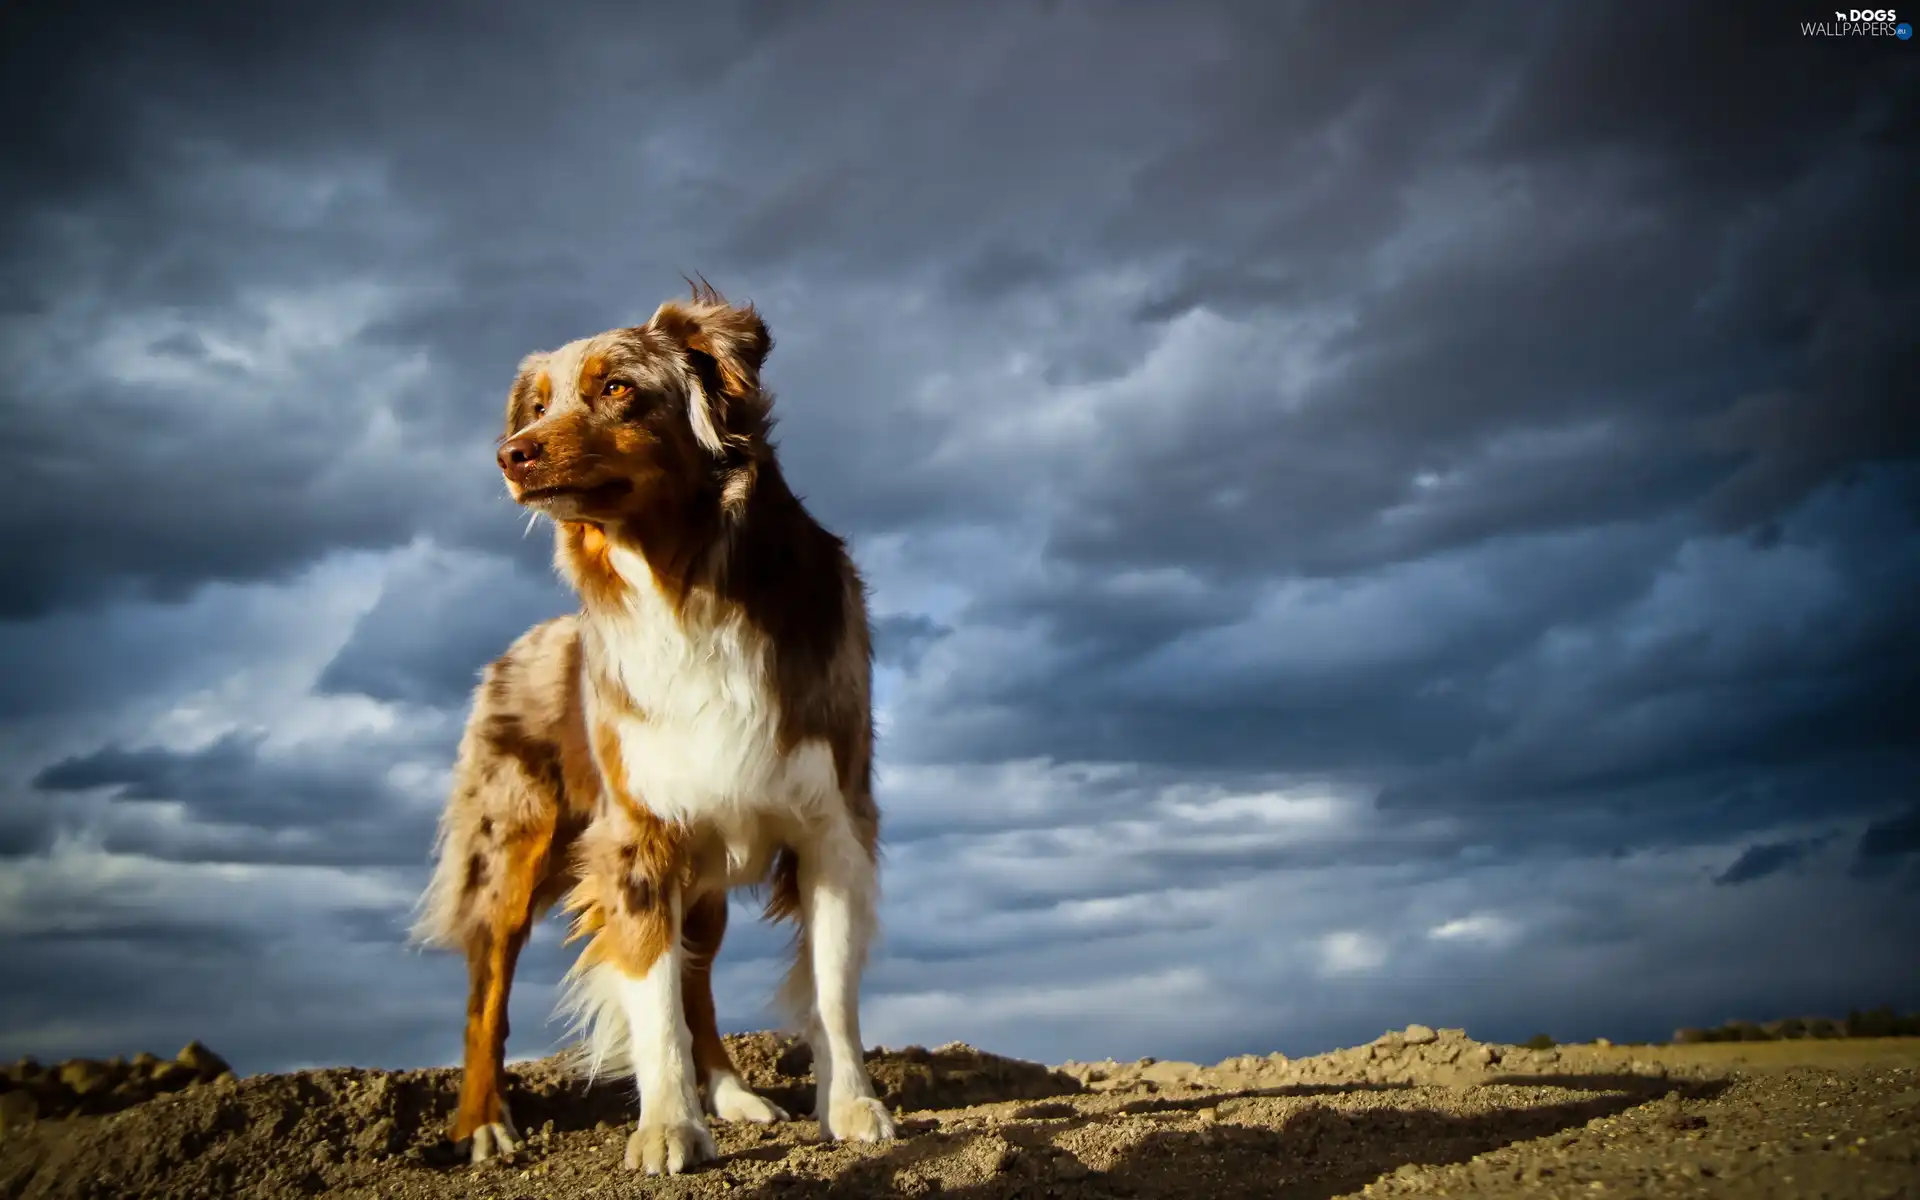 storm, clouds, dog